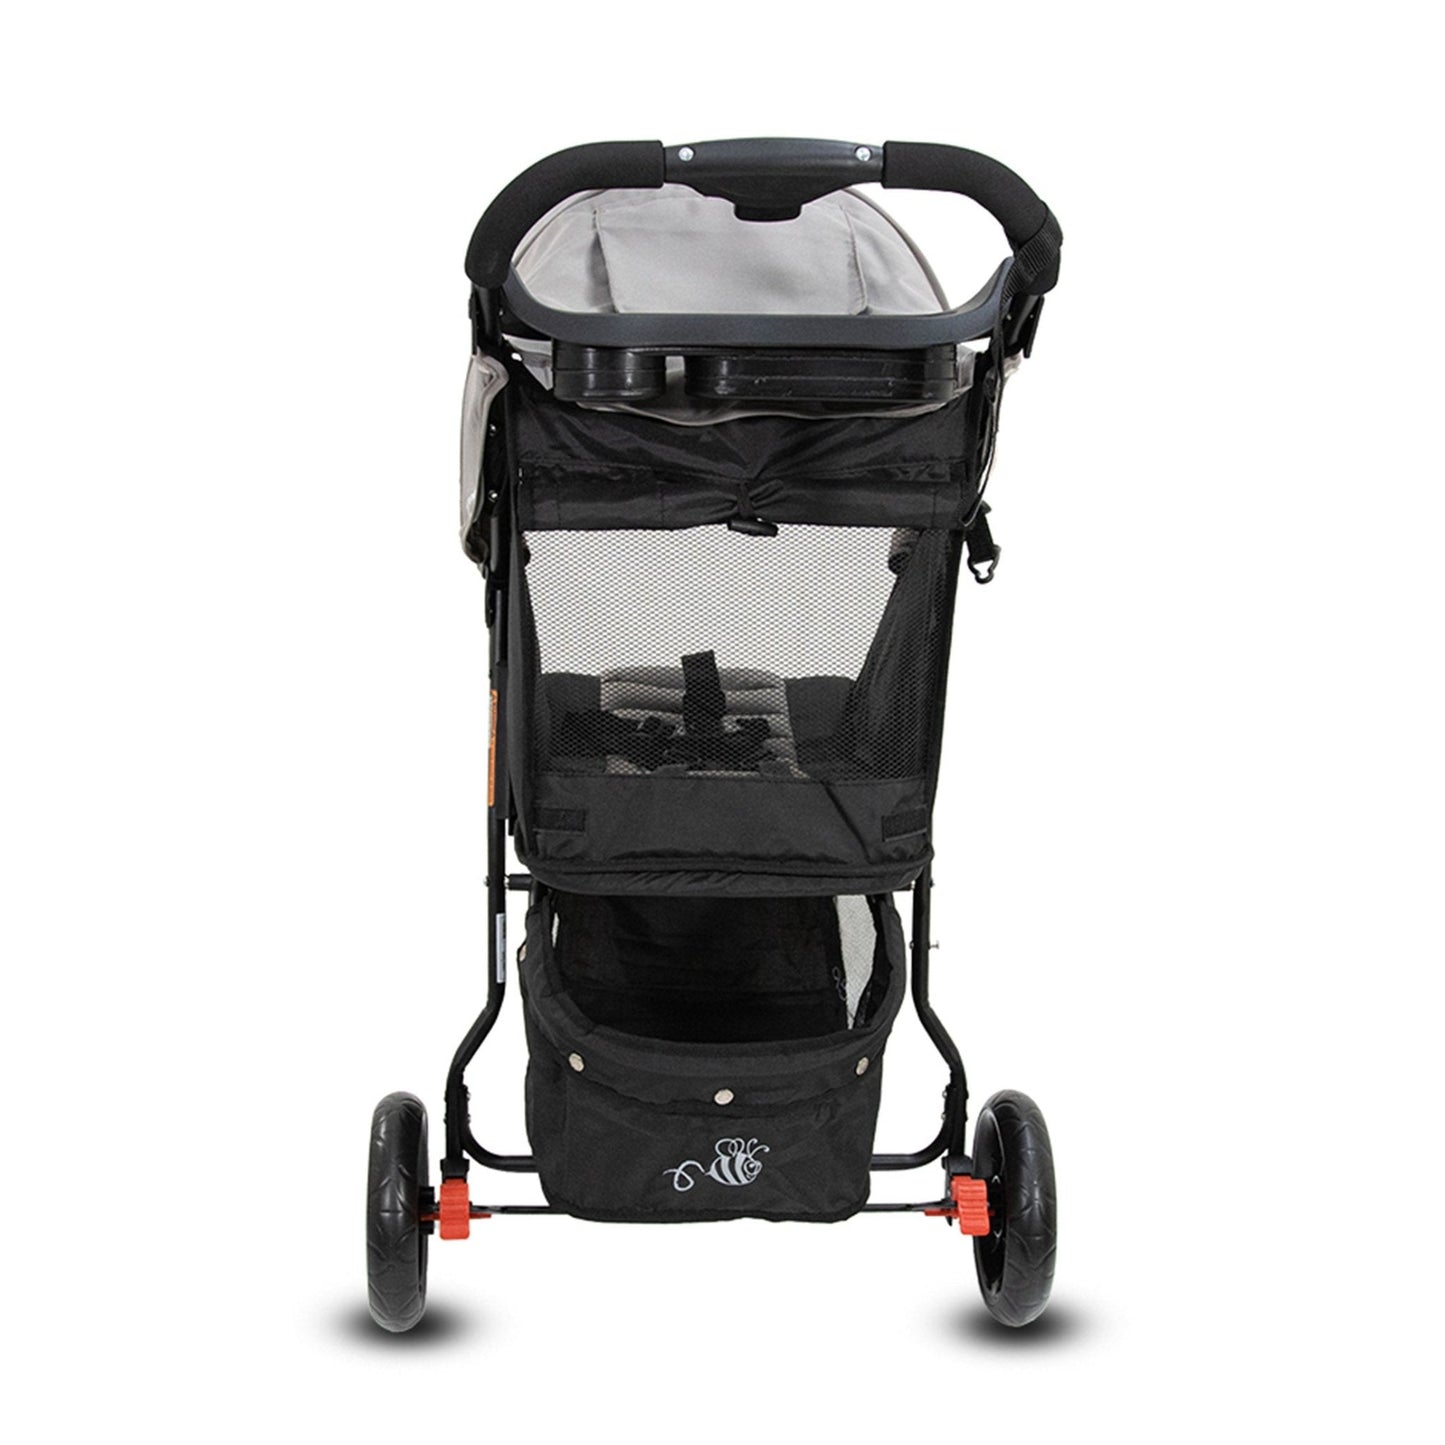 Veebee Navigator Stroller 3-wheel Pram For Newborns To Toddlers - Fauna - Little Kids Business